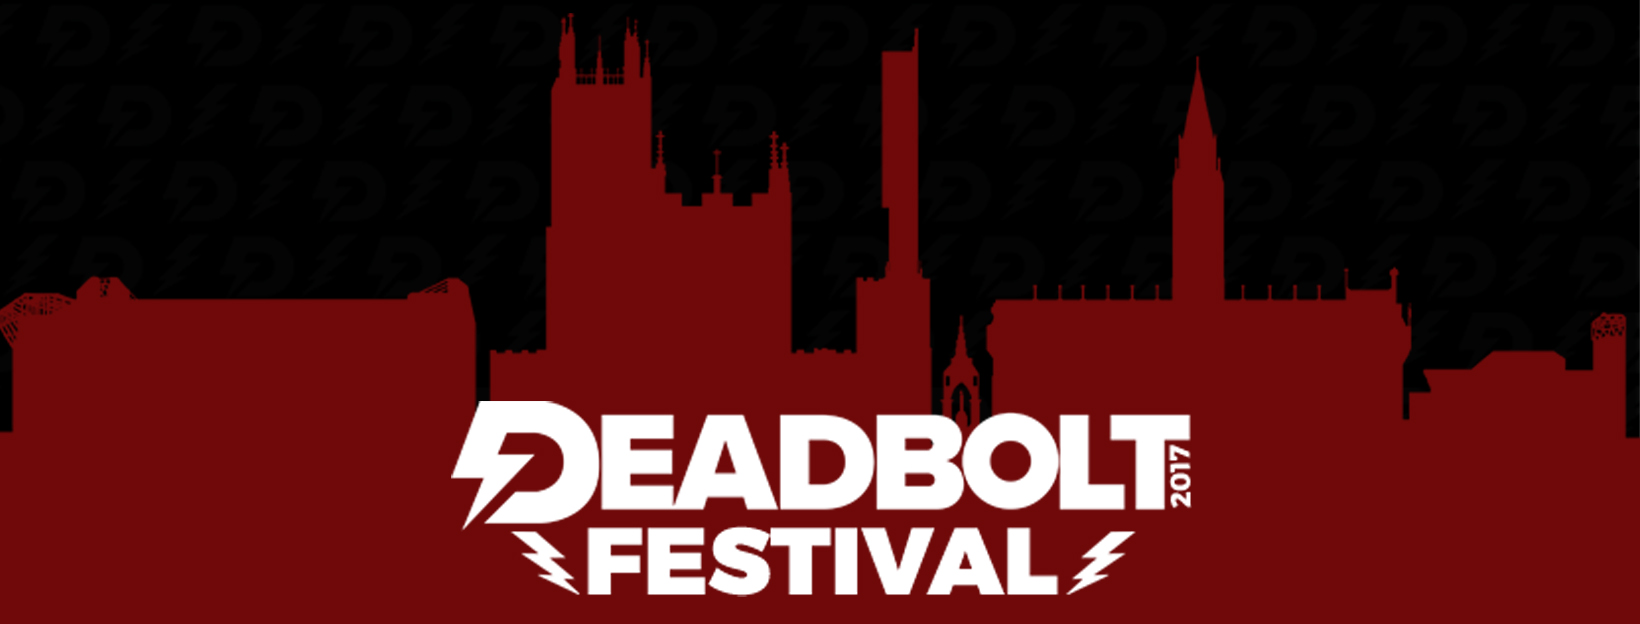 Deadbolt Festival poster